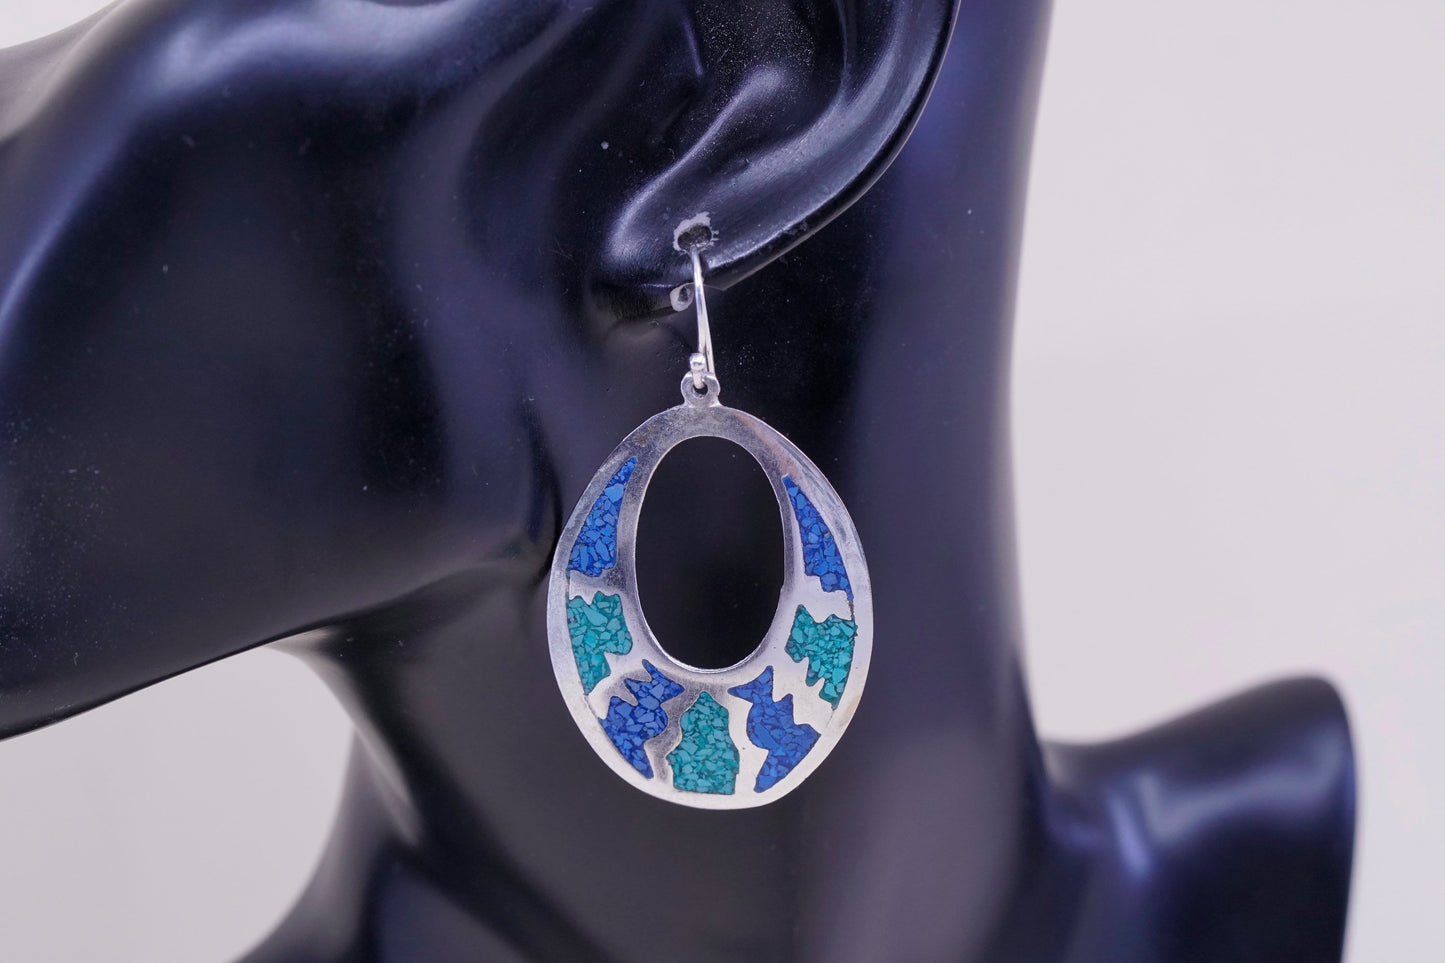 Vintage alpaca silver handmade earrings, huge oval dangles with turquoise